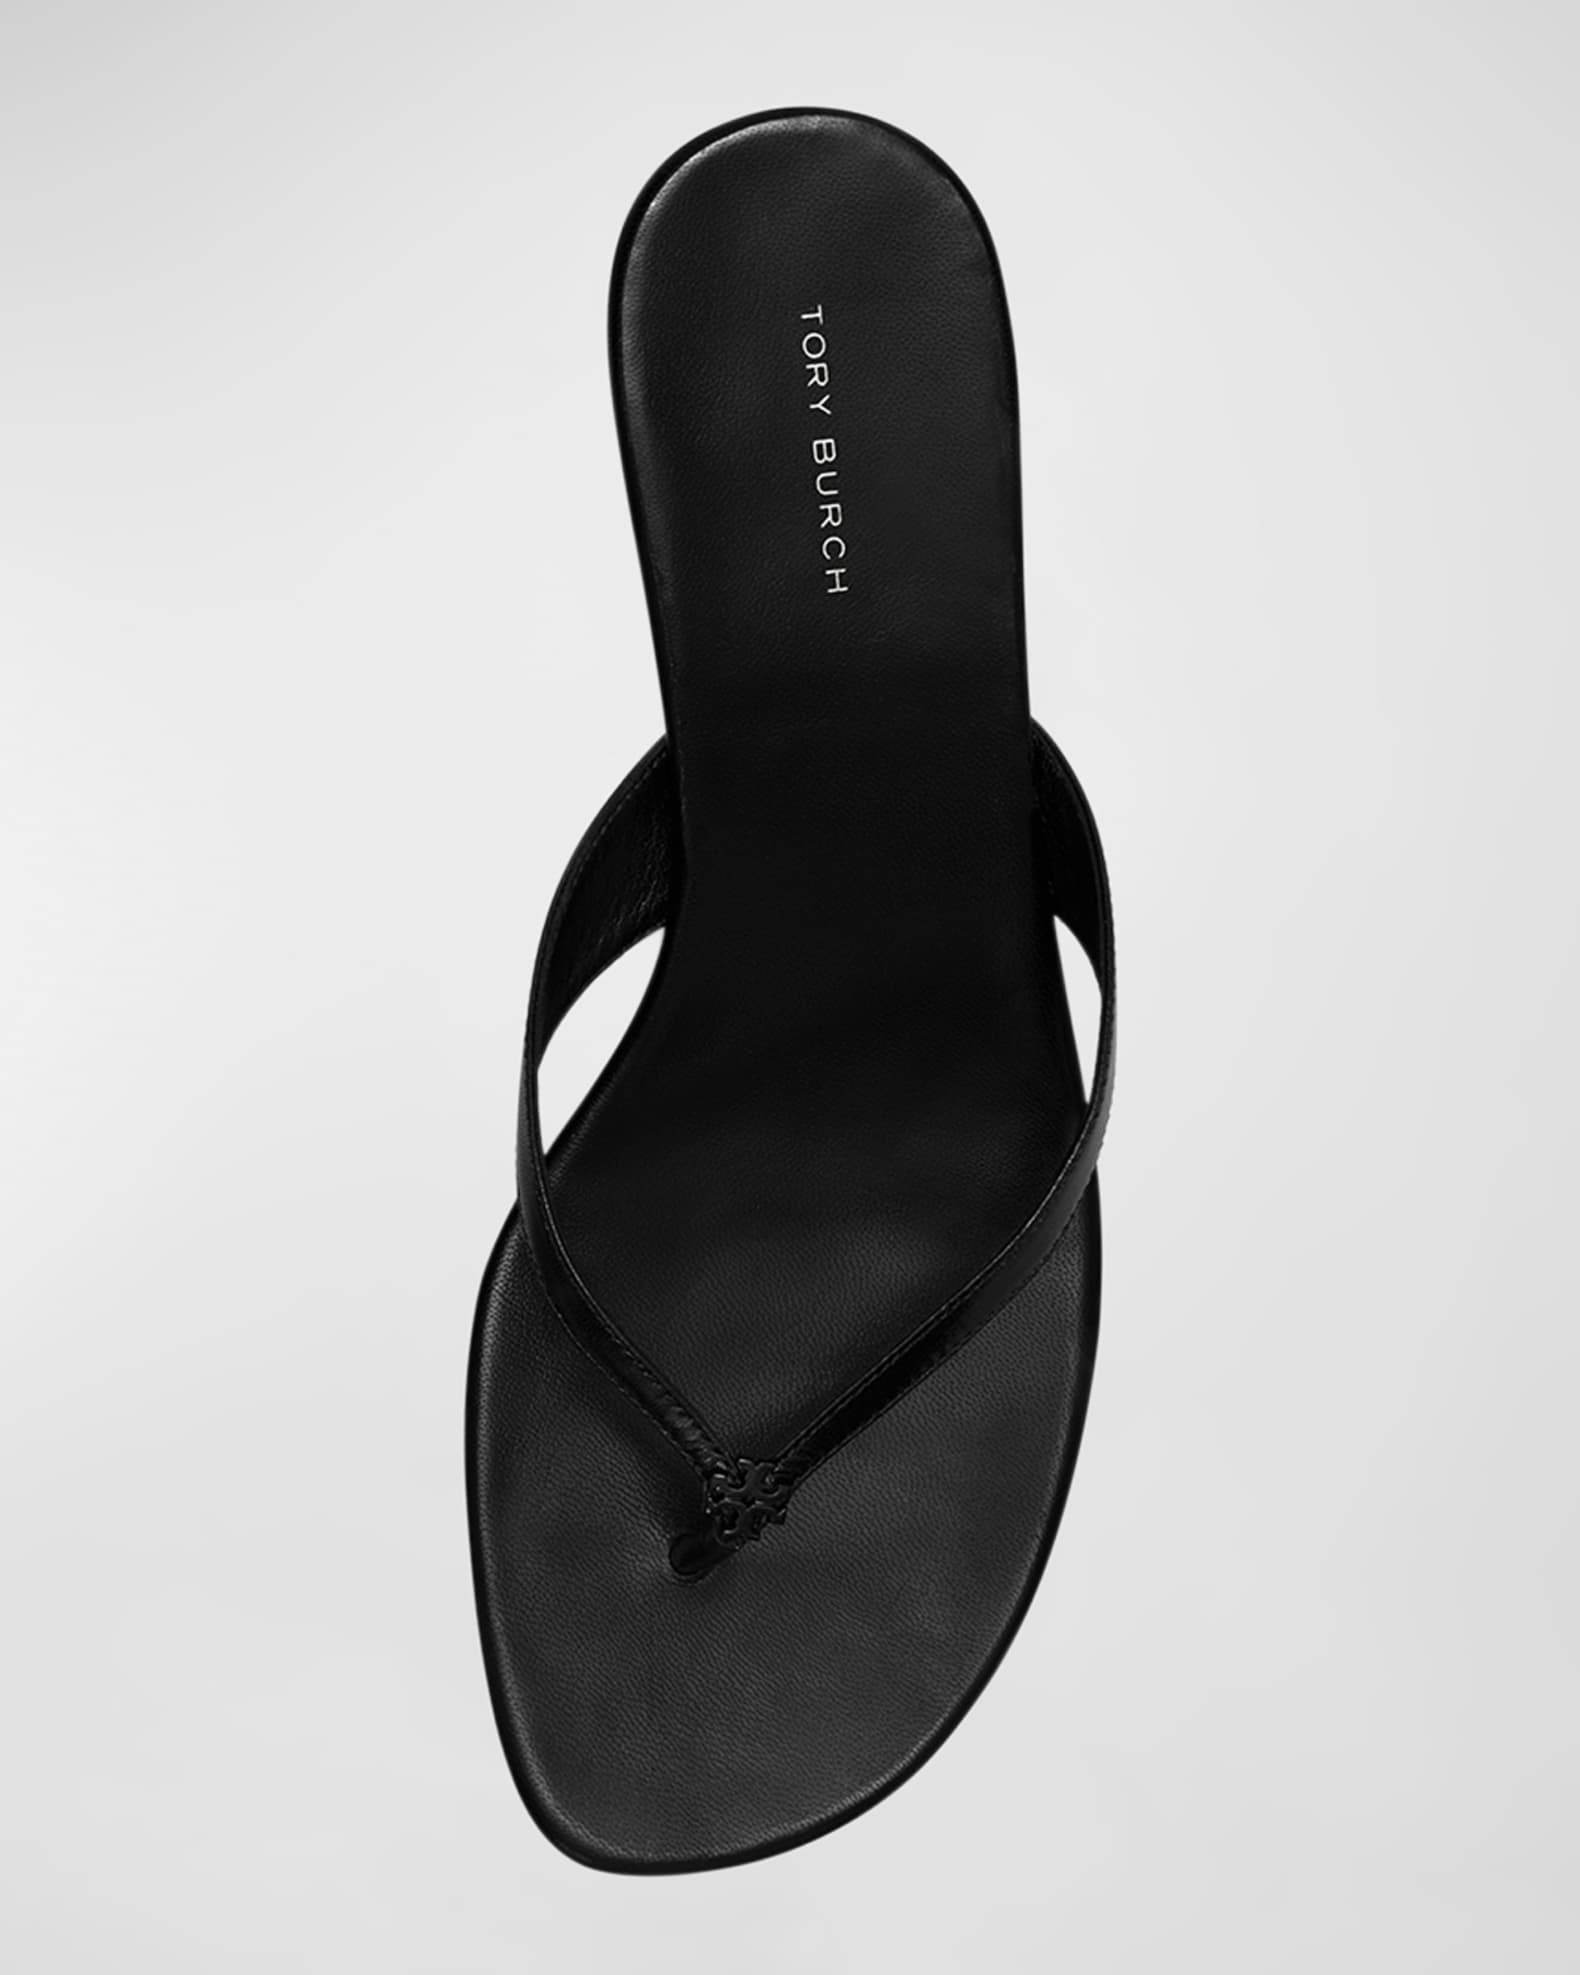 Tory Burch Capri Leather Kitten-Heel Thong Sandals | Neiman Marcus